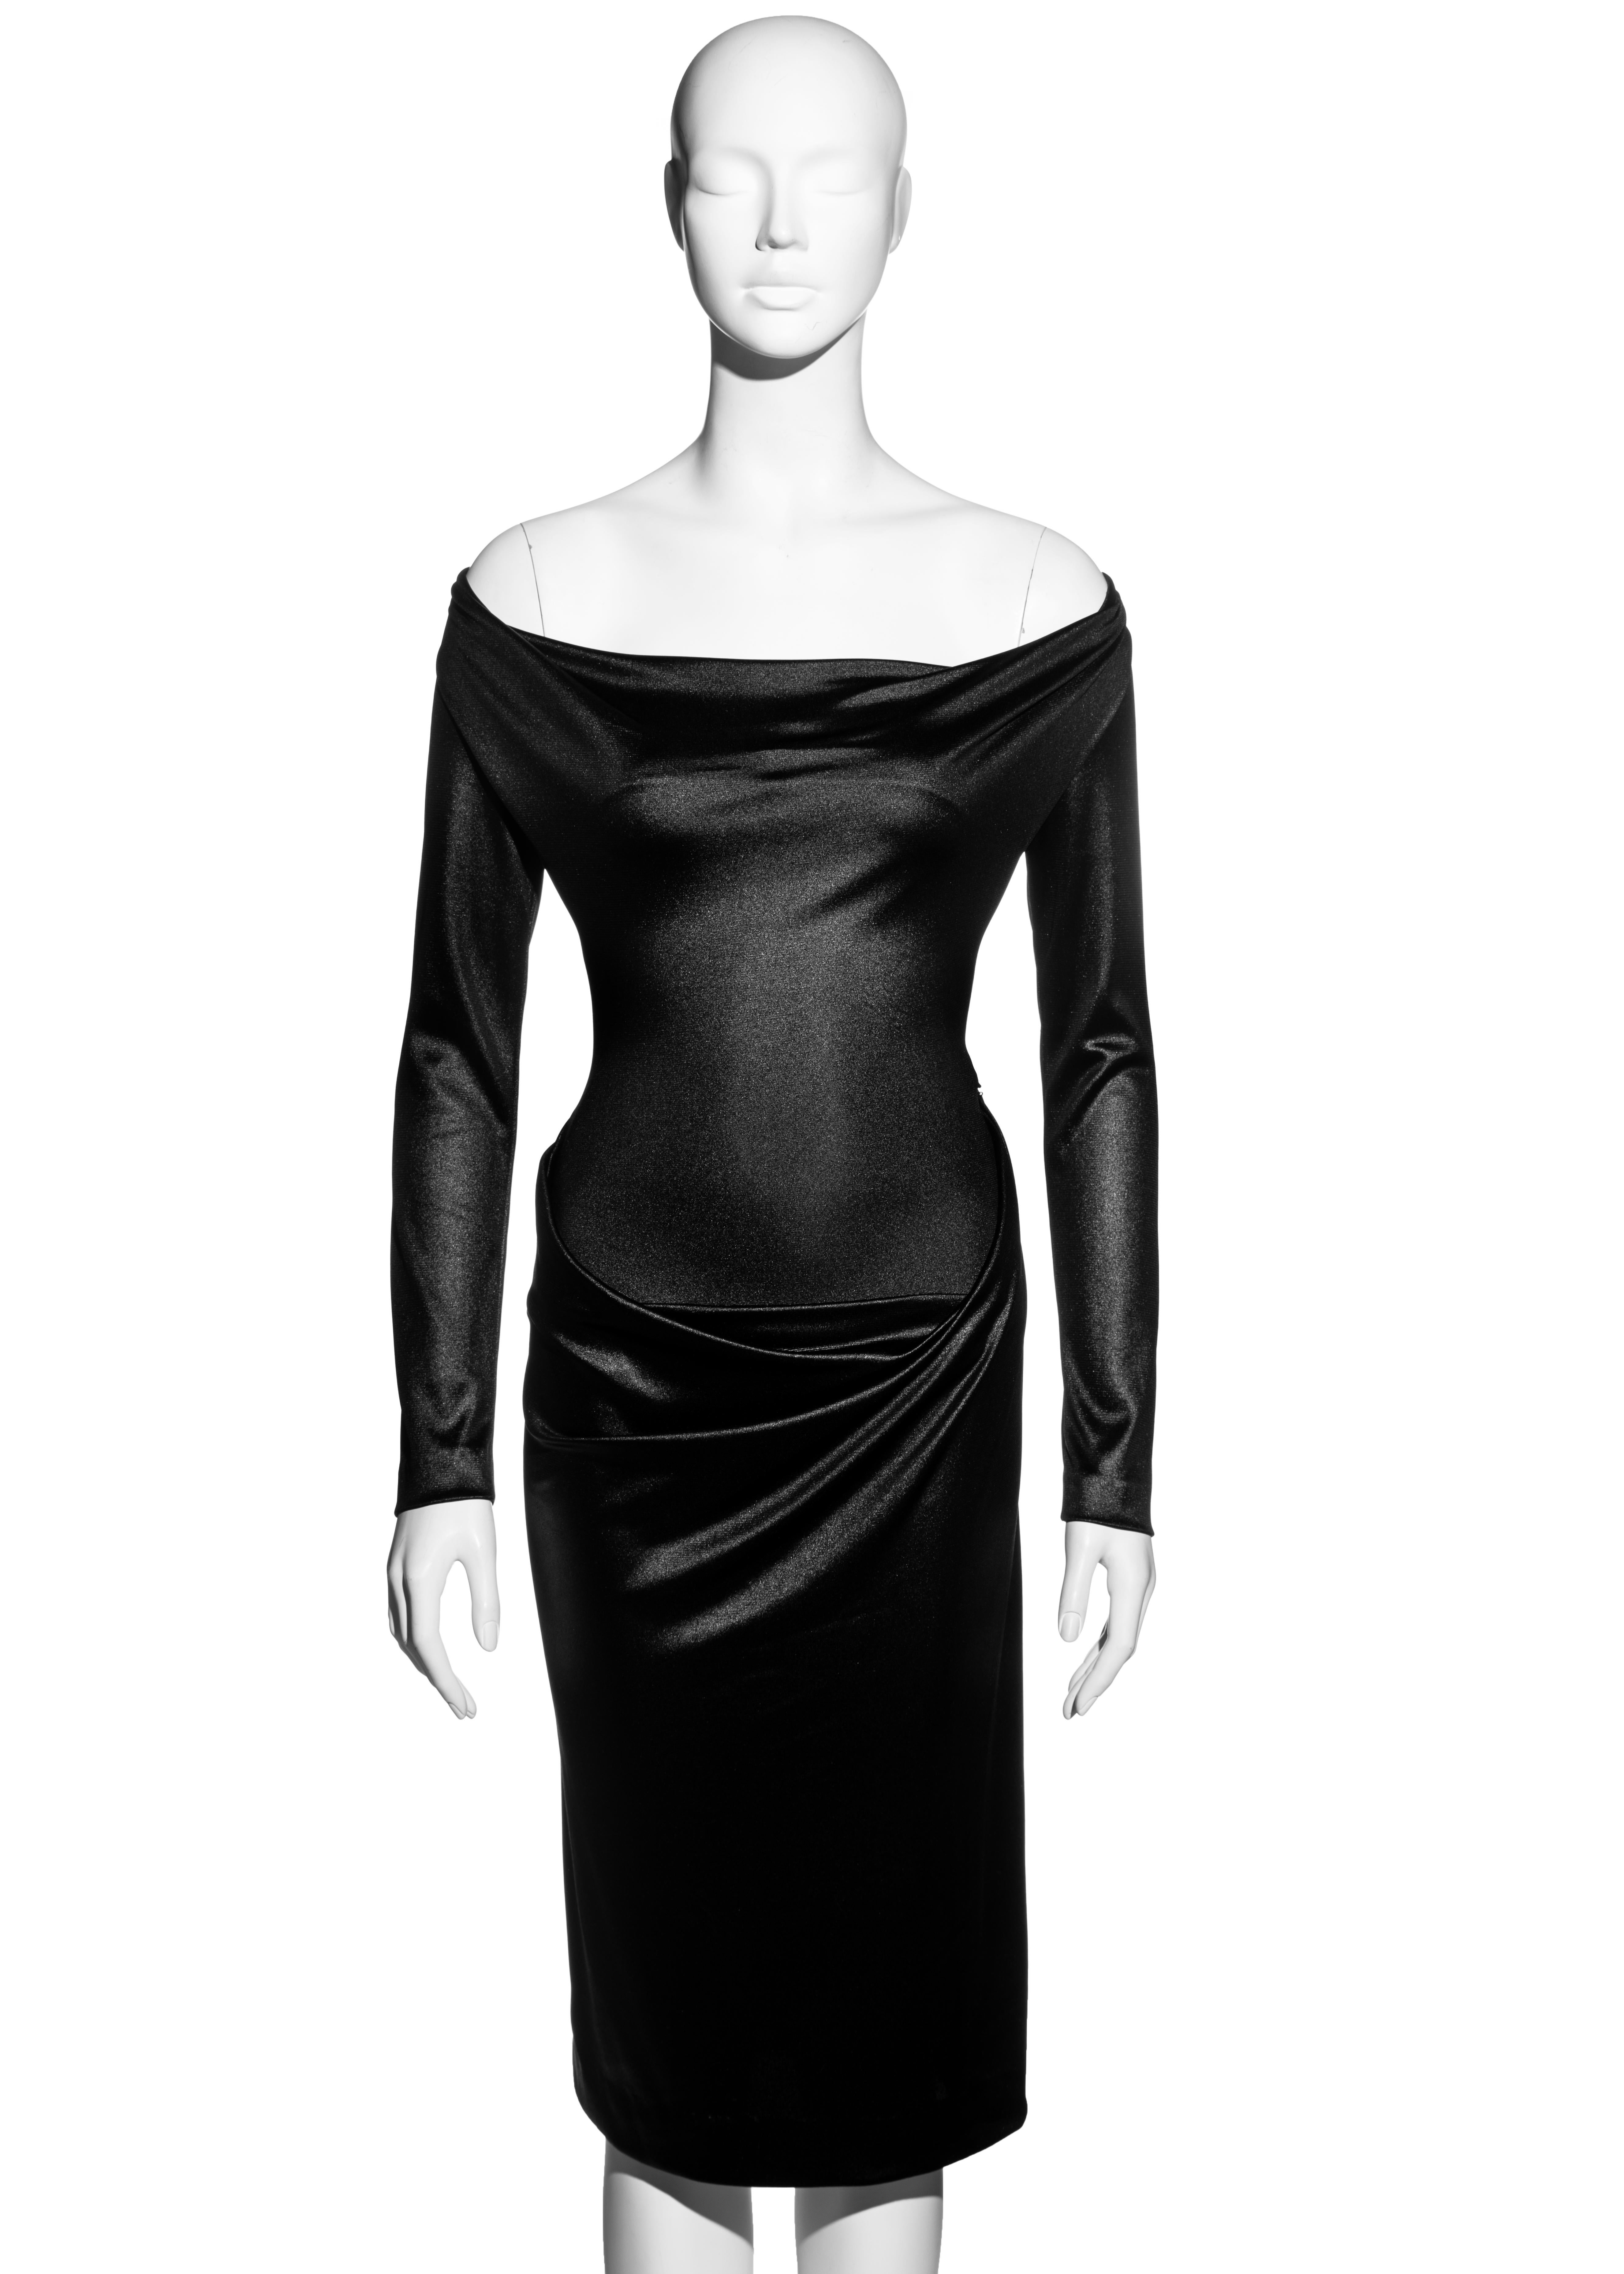 ▪ Vivienne Westwood nylon jersey off shoulder evening dress
▪ 100% Nylon
▪ Draped skirt with side slit 
▪ Built-in bodysuit 
▪ FR 38 - UK 10 - US 6
▪ Fall-Winter 1997